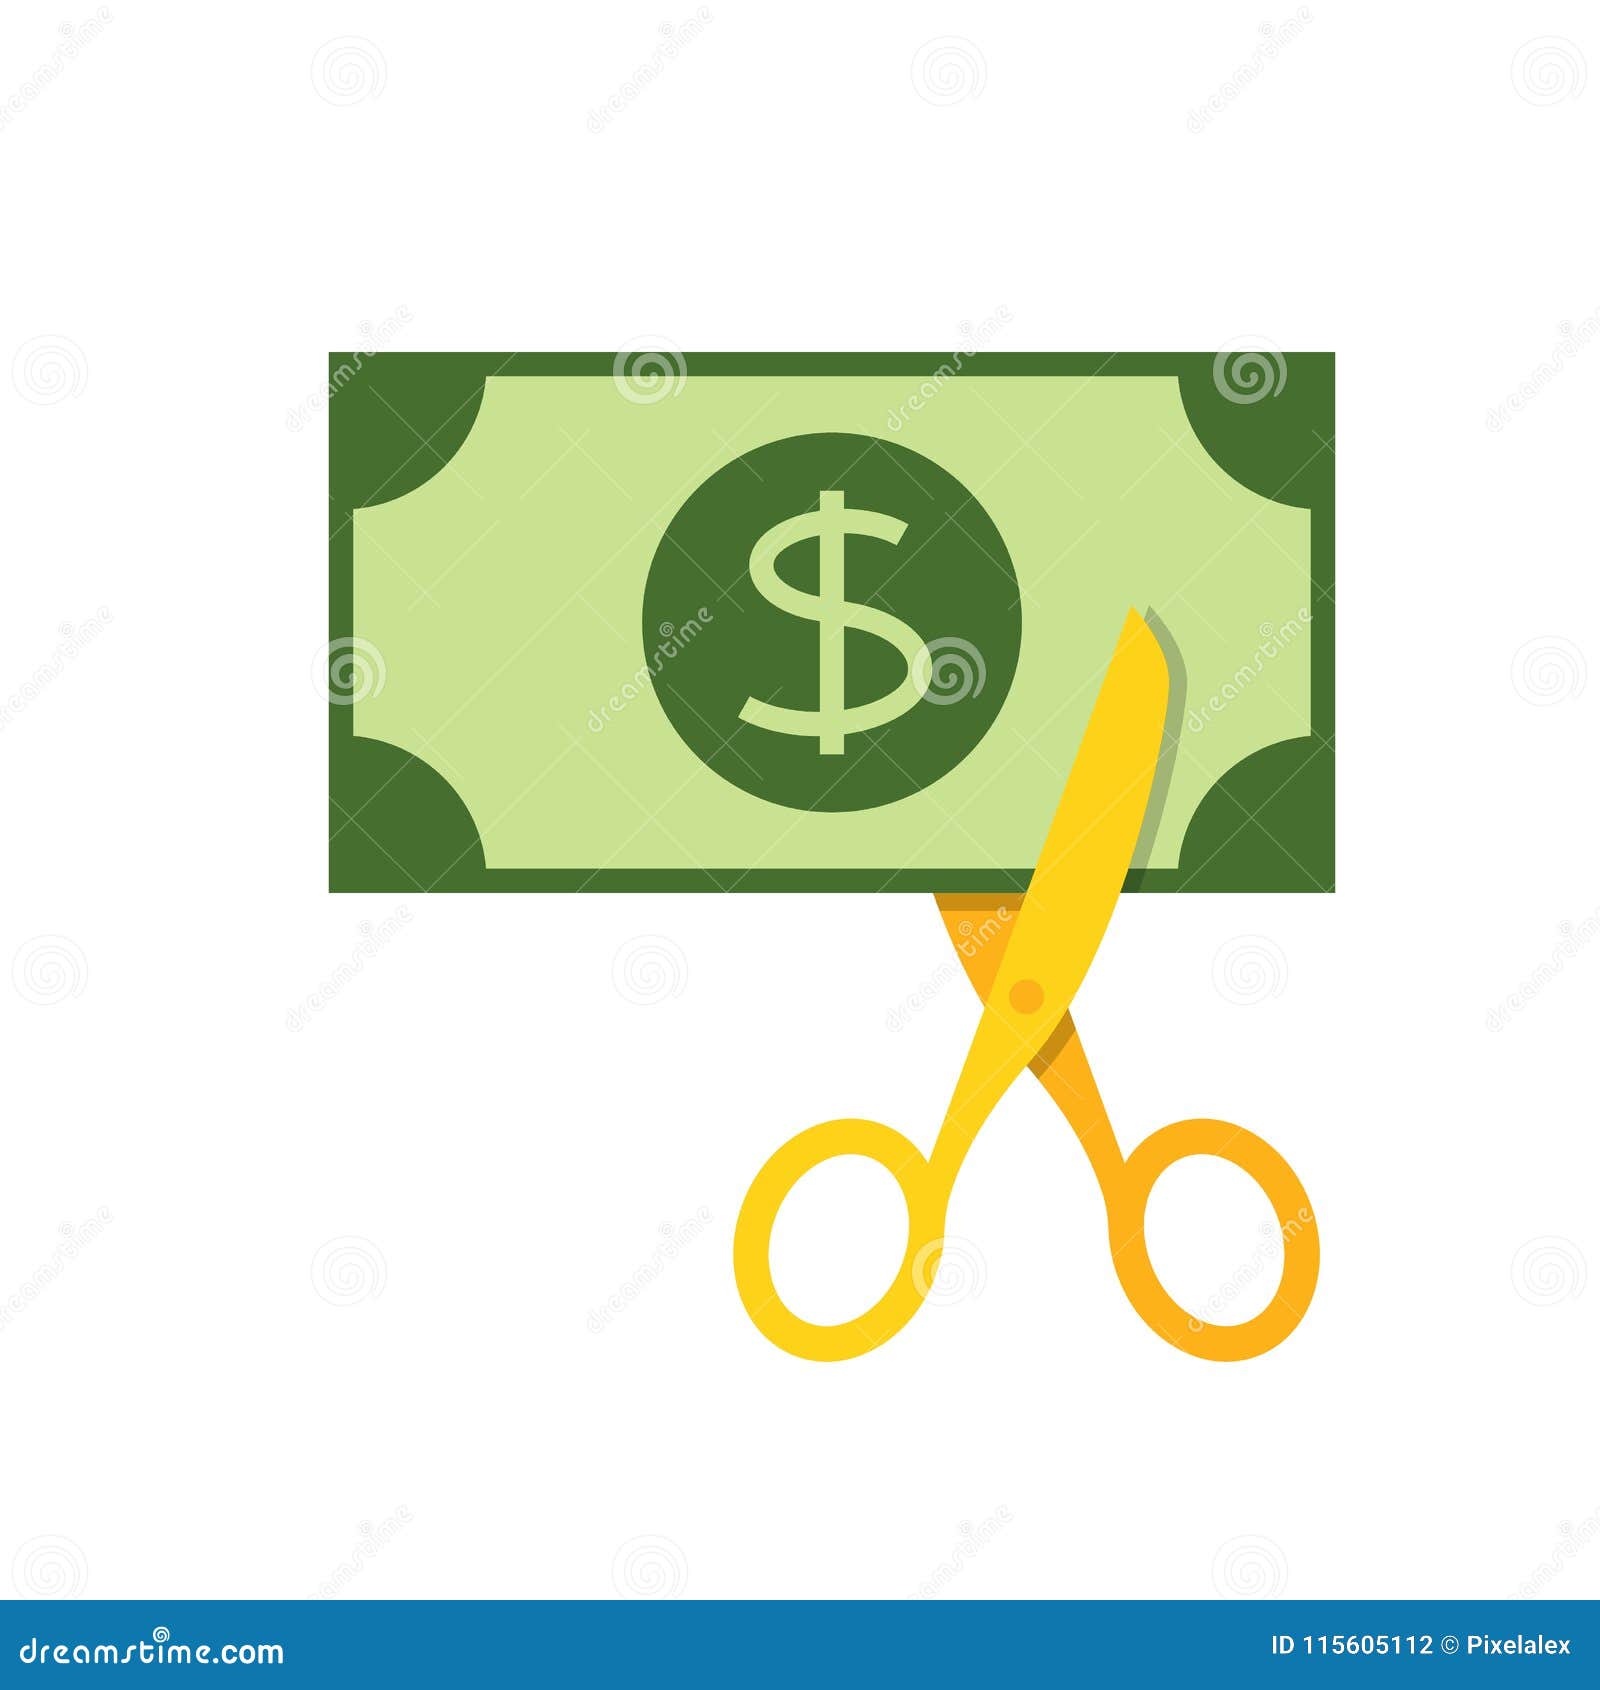 Scissors cutting money stock vector. Illustration of percentage - 115605112